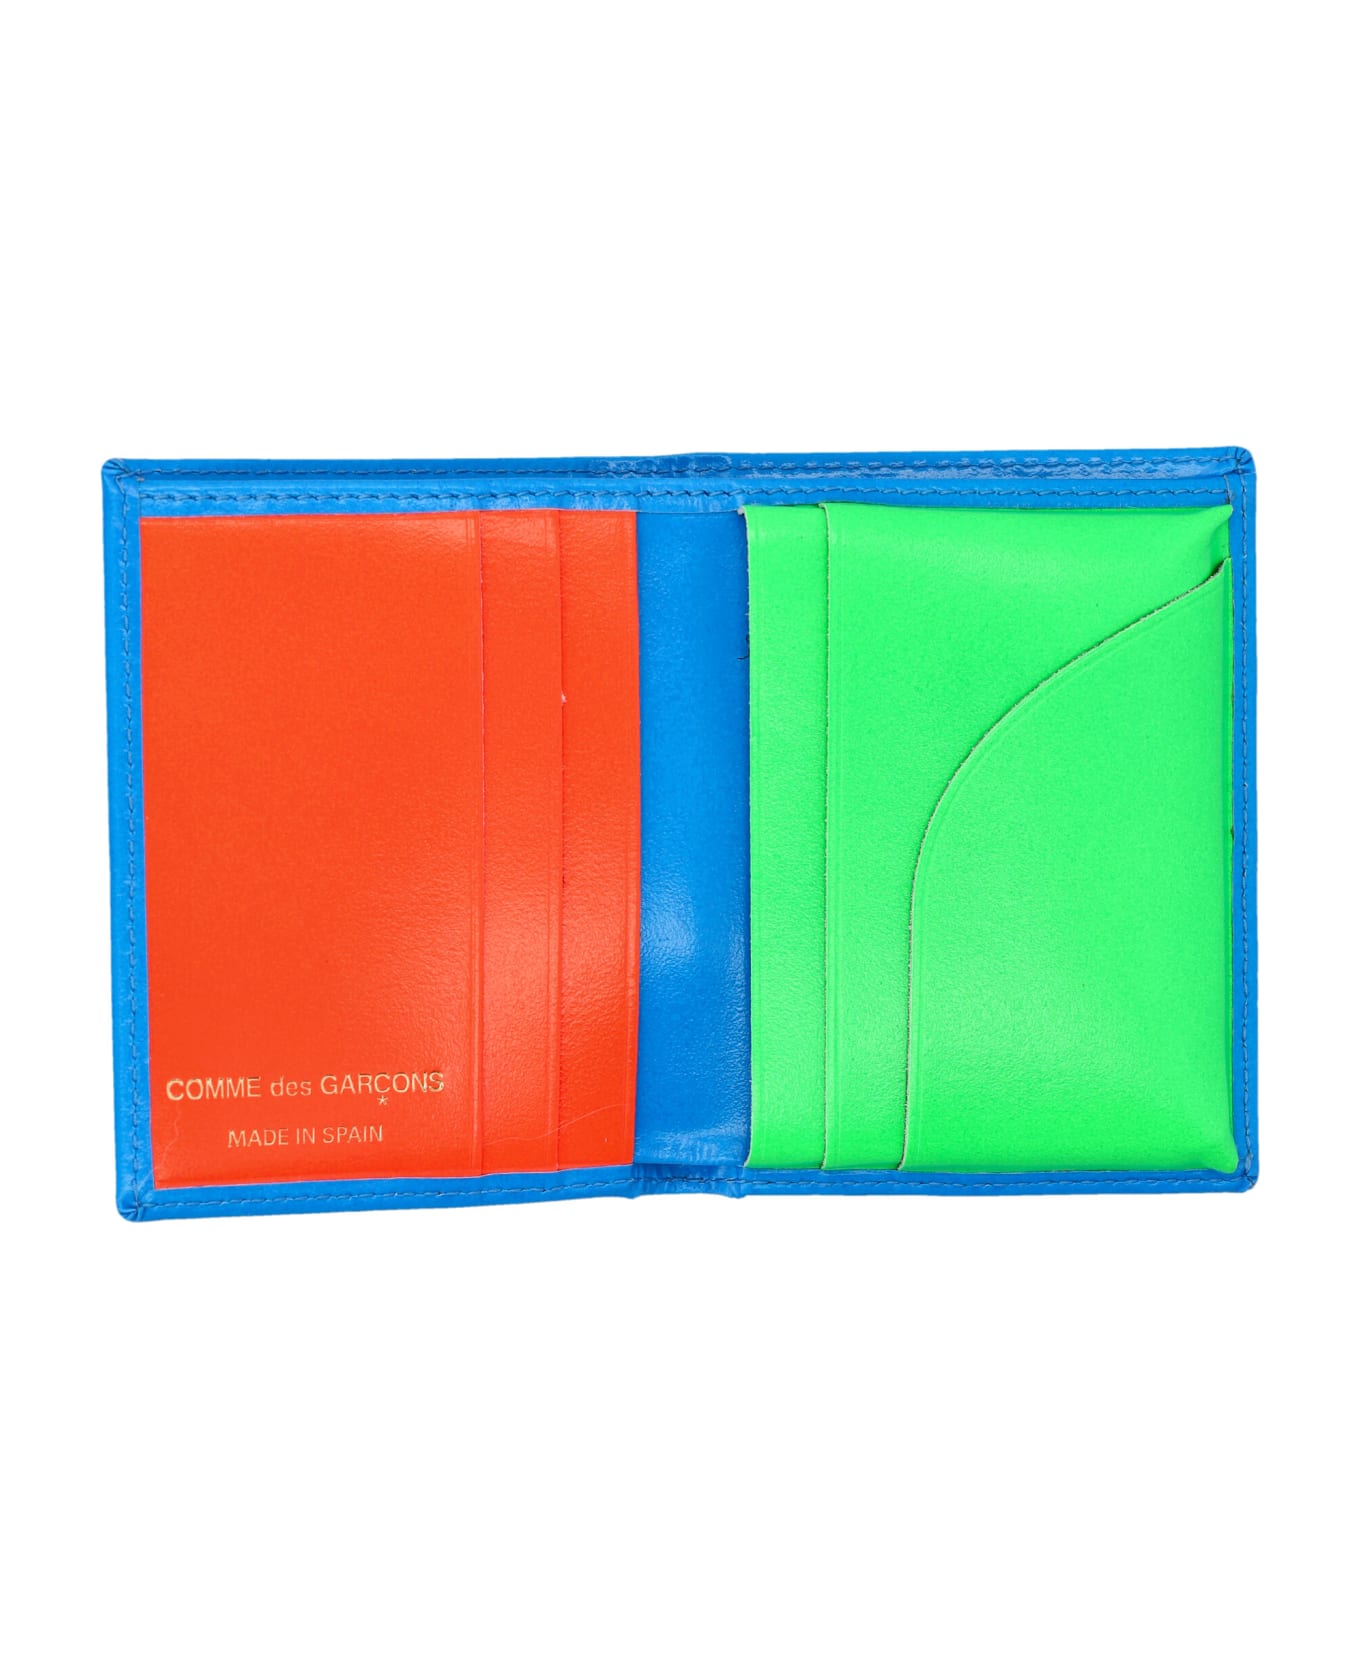 Comme des Garçons Wallet Super Fluo Cardholder - GREEN/BLUE 財布